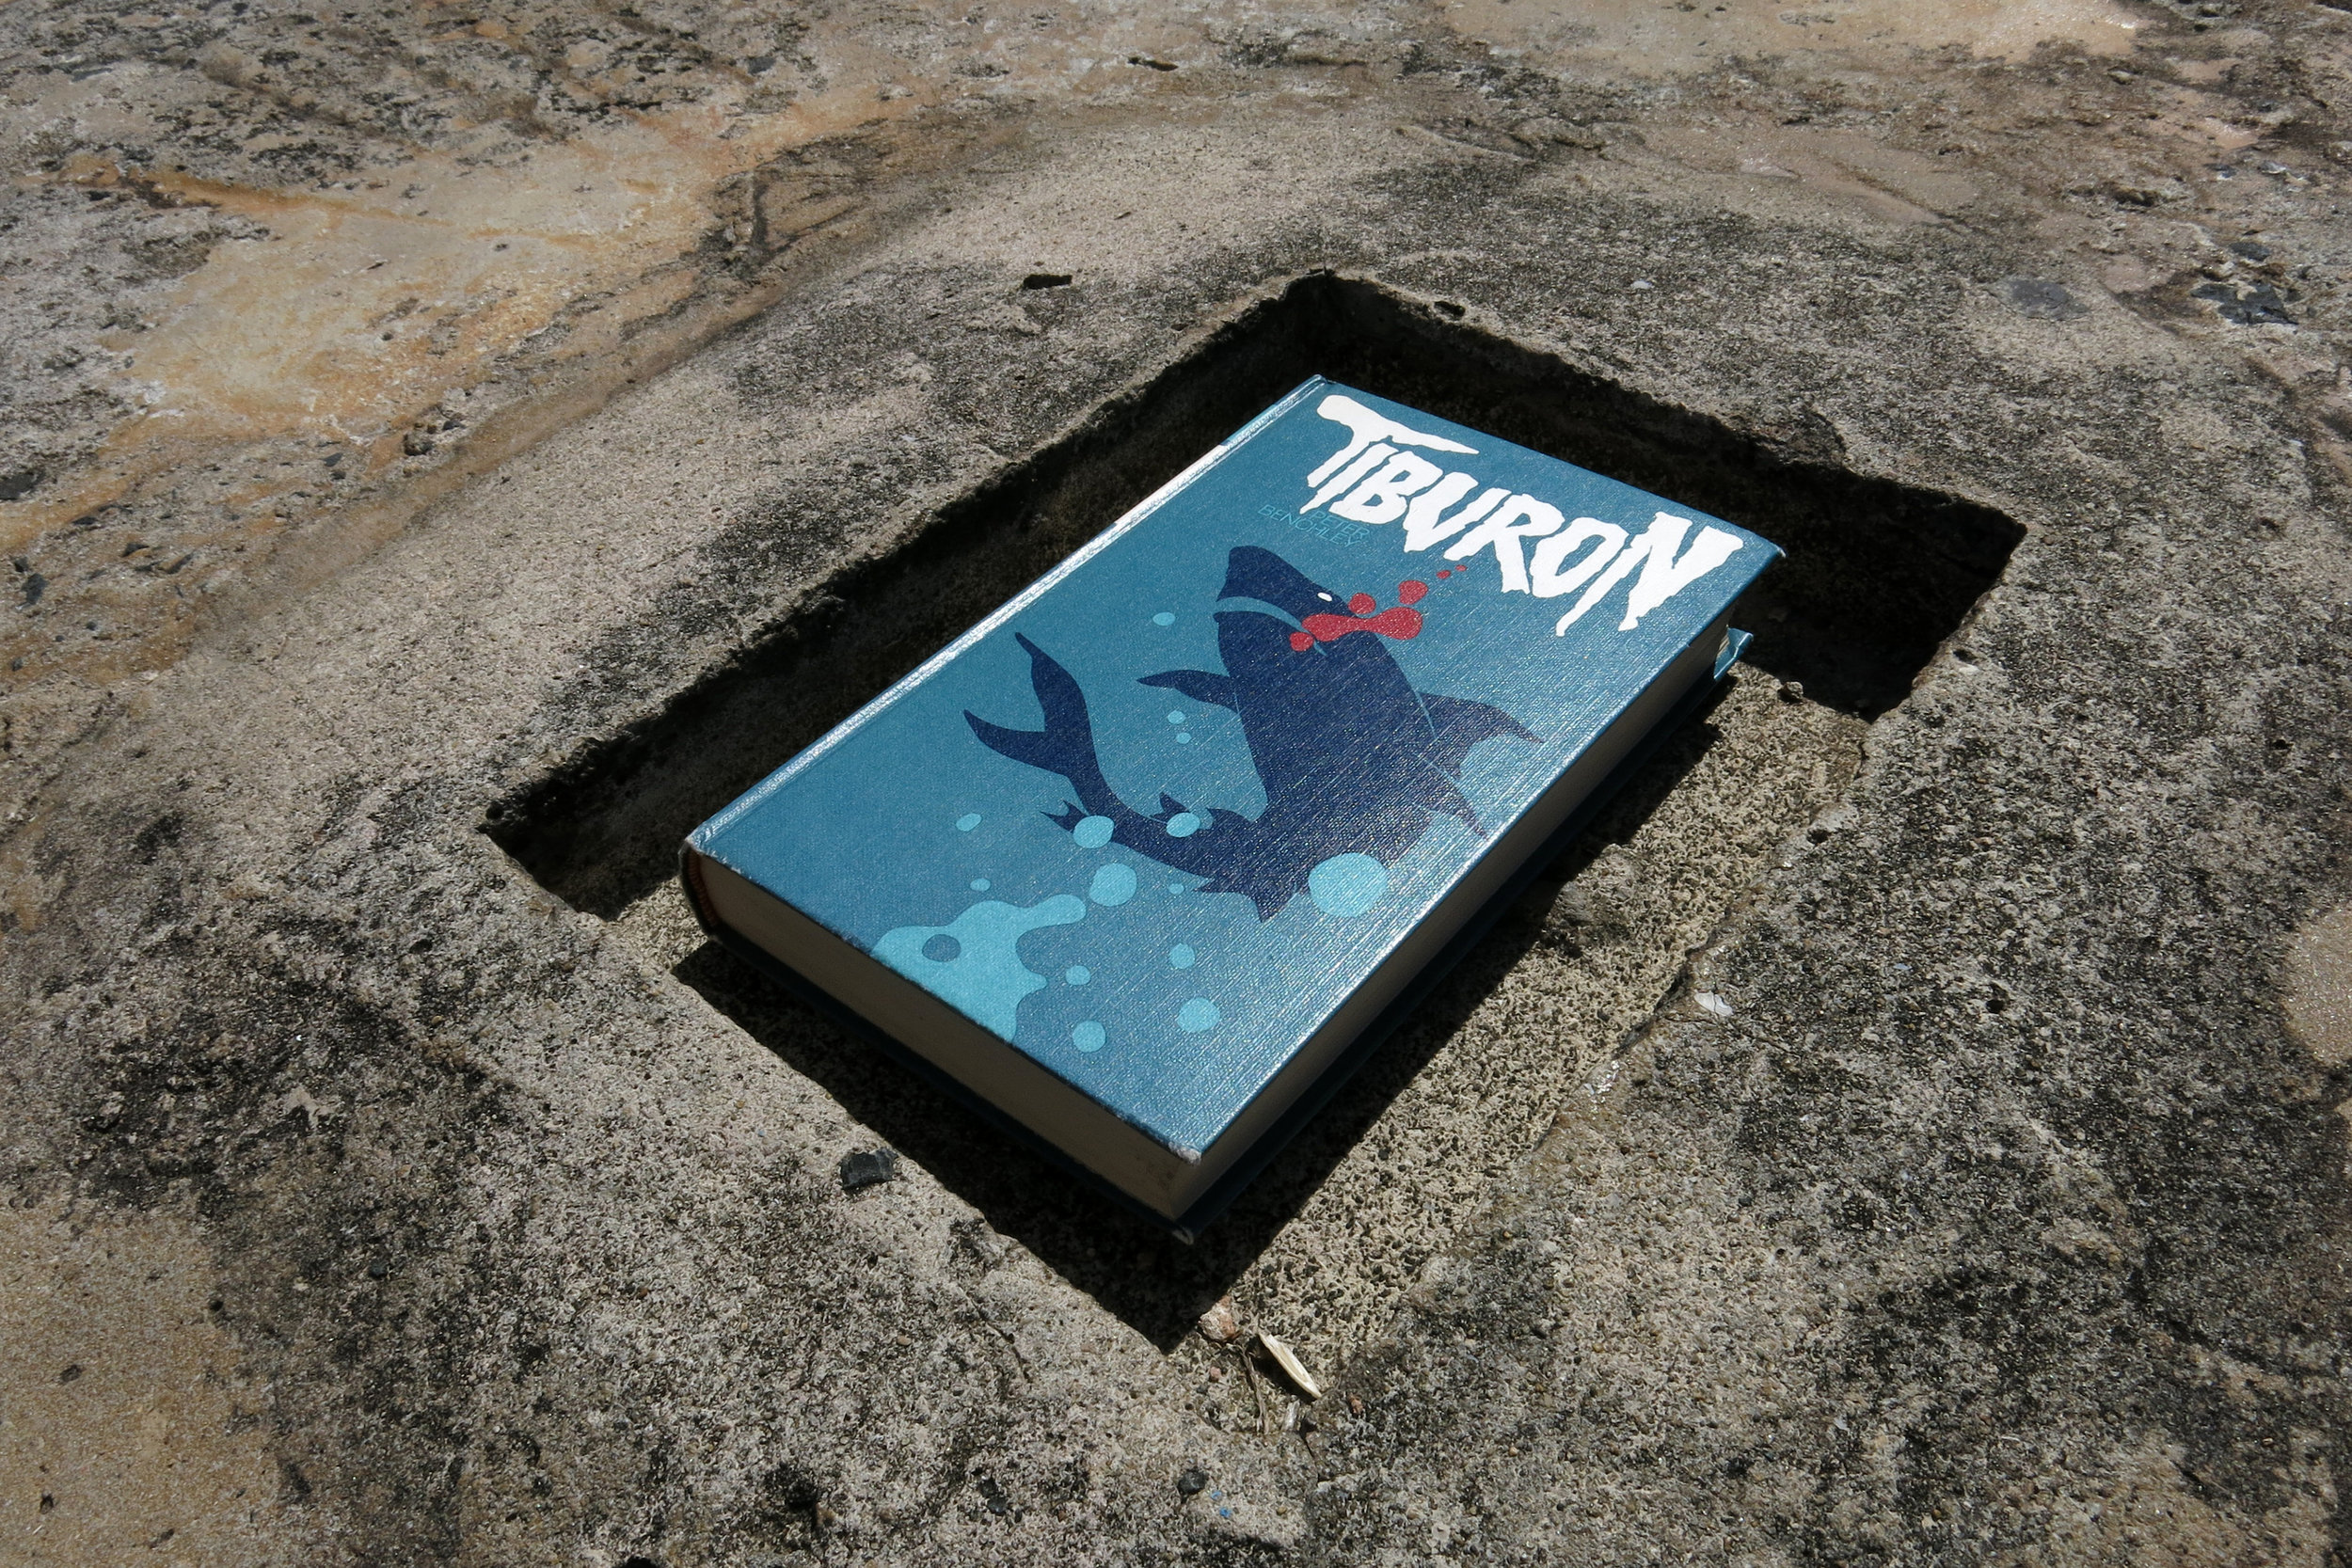   PABLO GUARDIOLA   Sharks 1 , 2014, digital c-print, edition of 3 + 2AP, 10" x 15" 